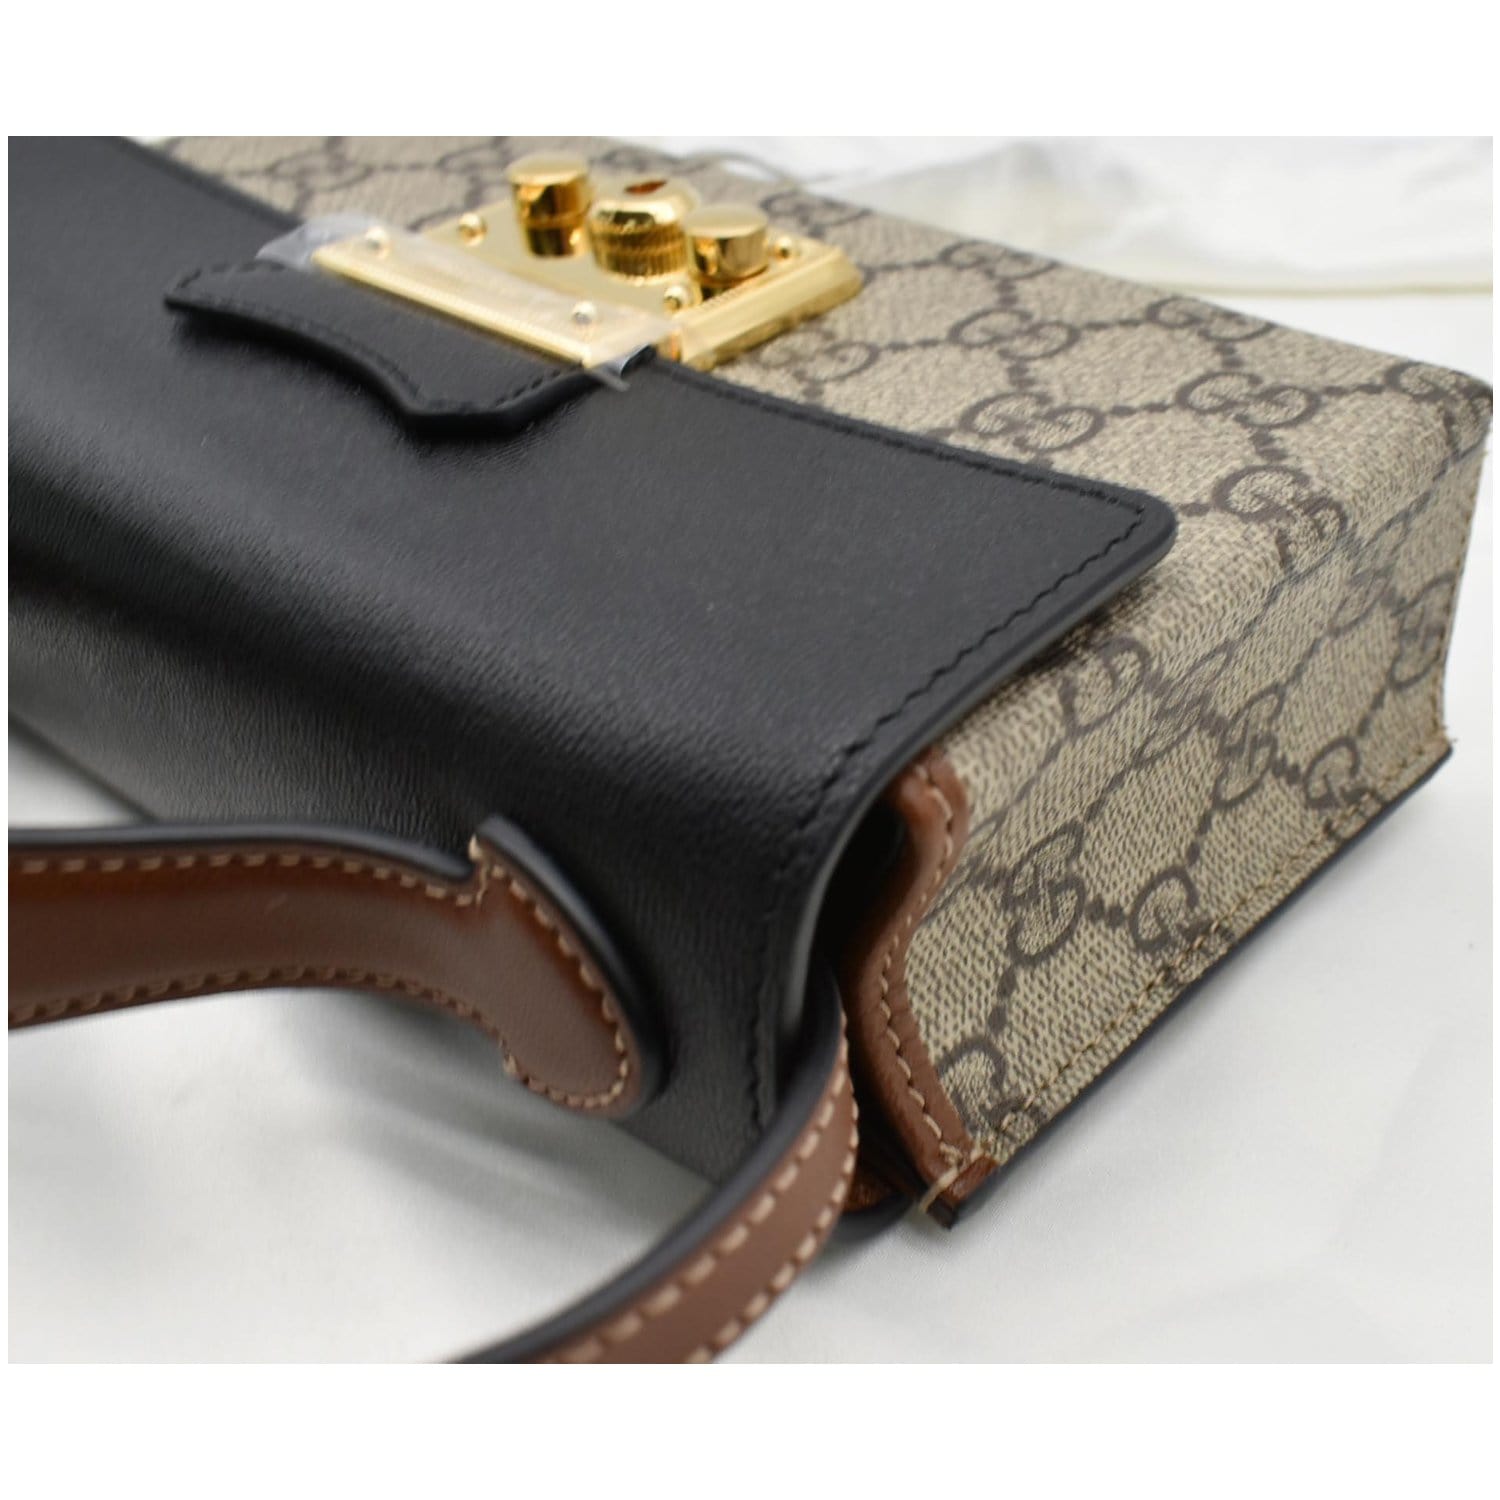 Beige Padlock small GG-Supreme canvas shoulder bag, Gucci